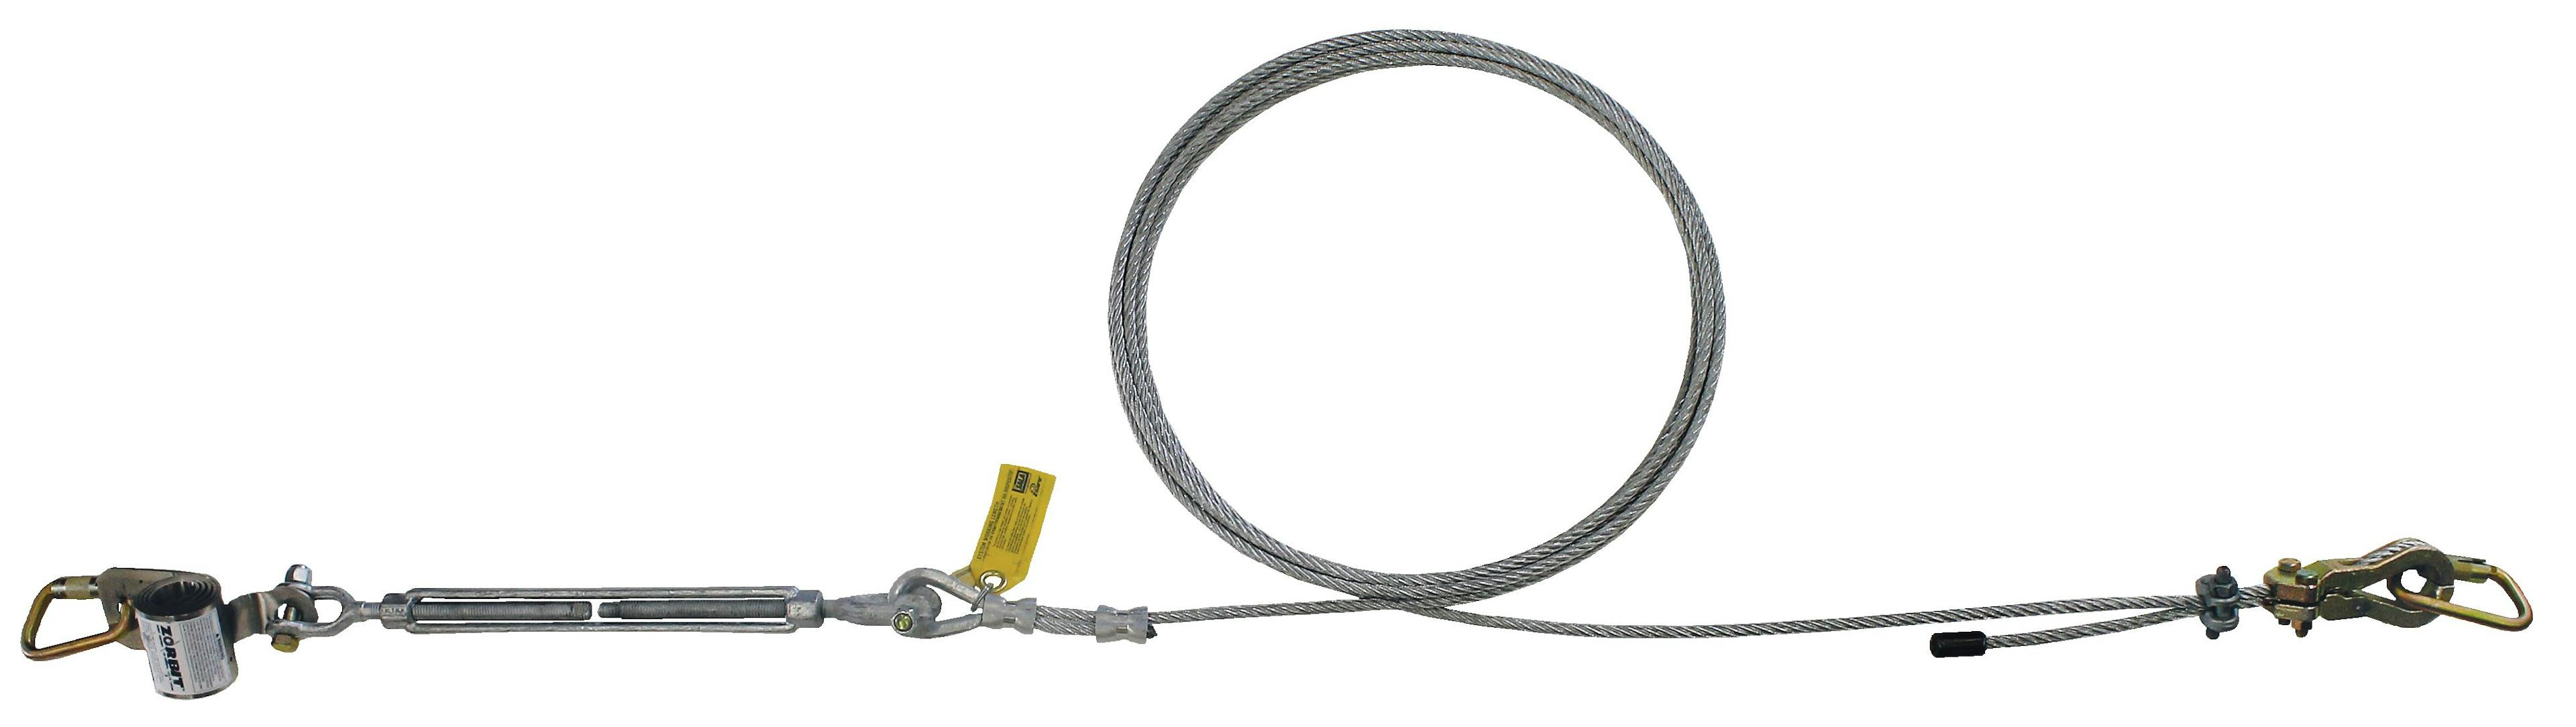 3M™ DBI-SALA® SecuraSpan™ Temporary Horizontal Lifeline System Cable Assembly 7403030, 1 EA/Case